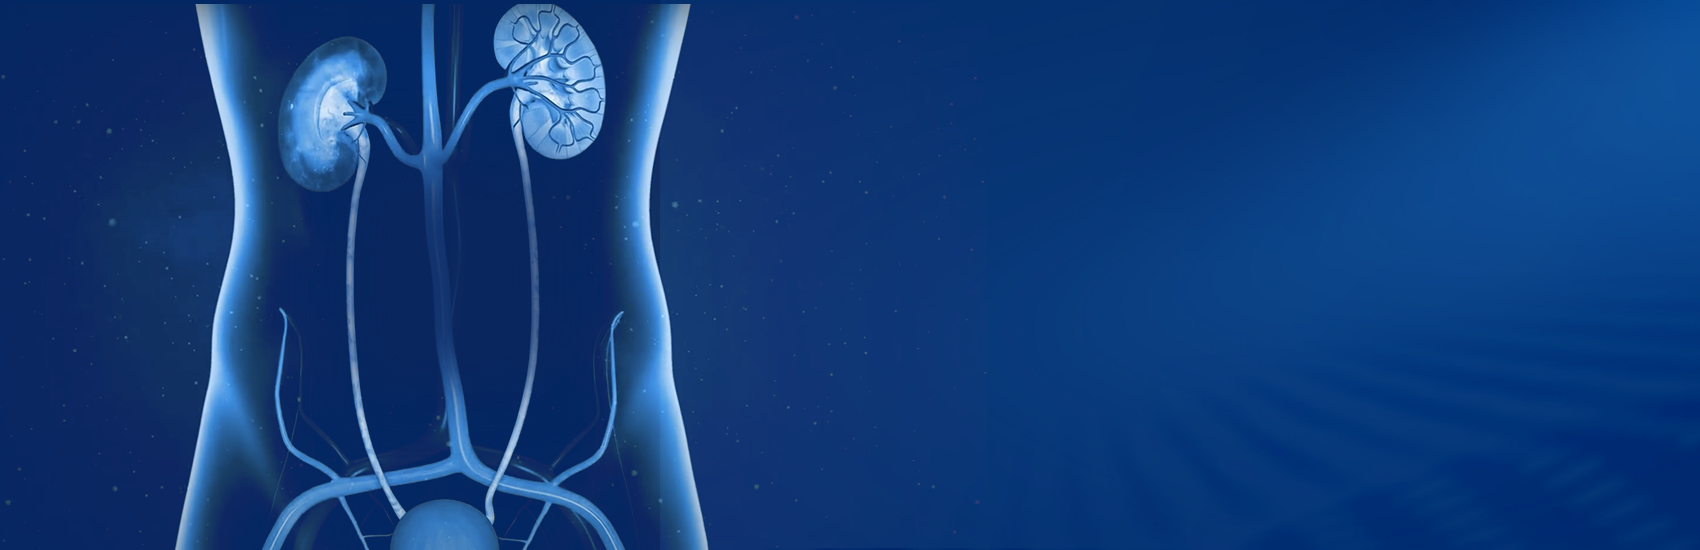 Blue illustration of body organs, focused on Kidneys. 